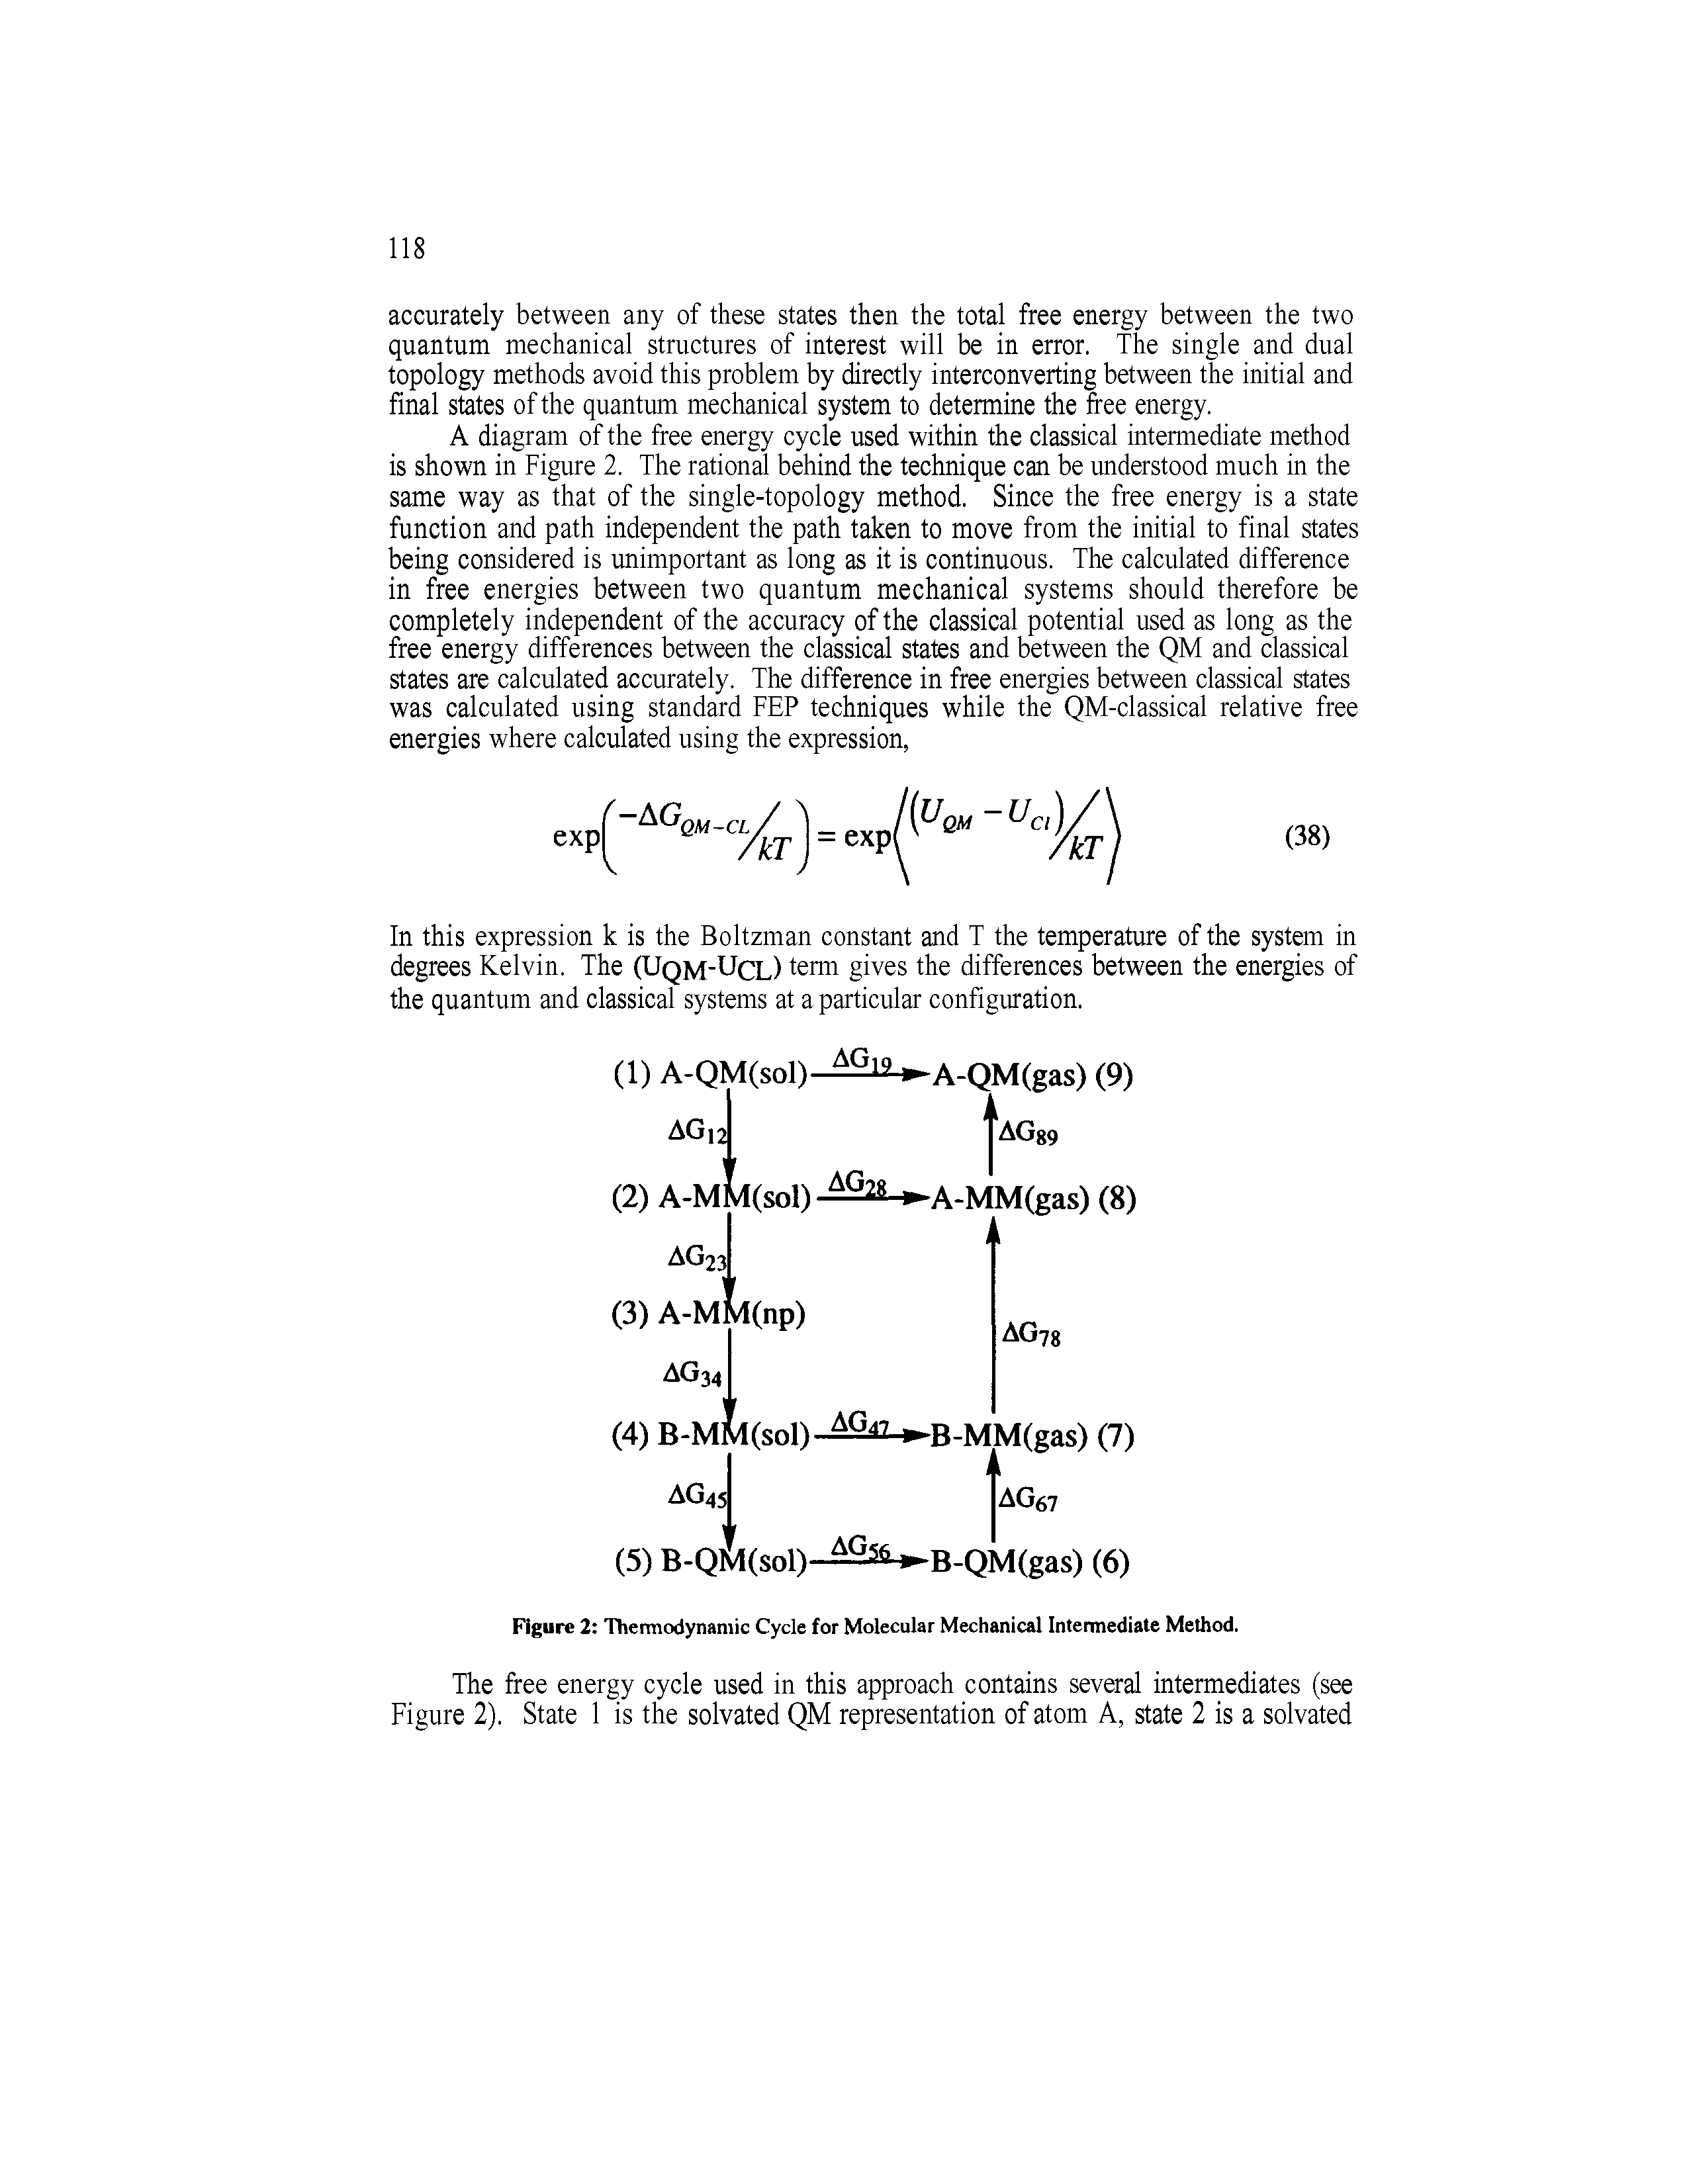 Figure 2 Thermodynamic Cycle for Molecular Mechanical Intermediate Method.